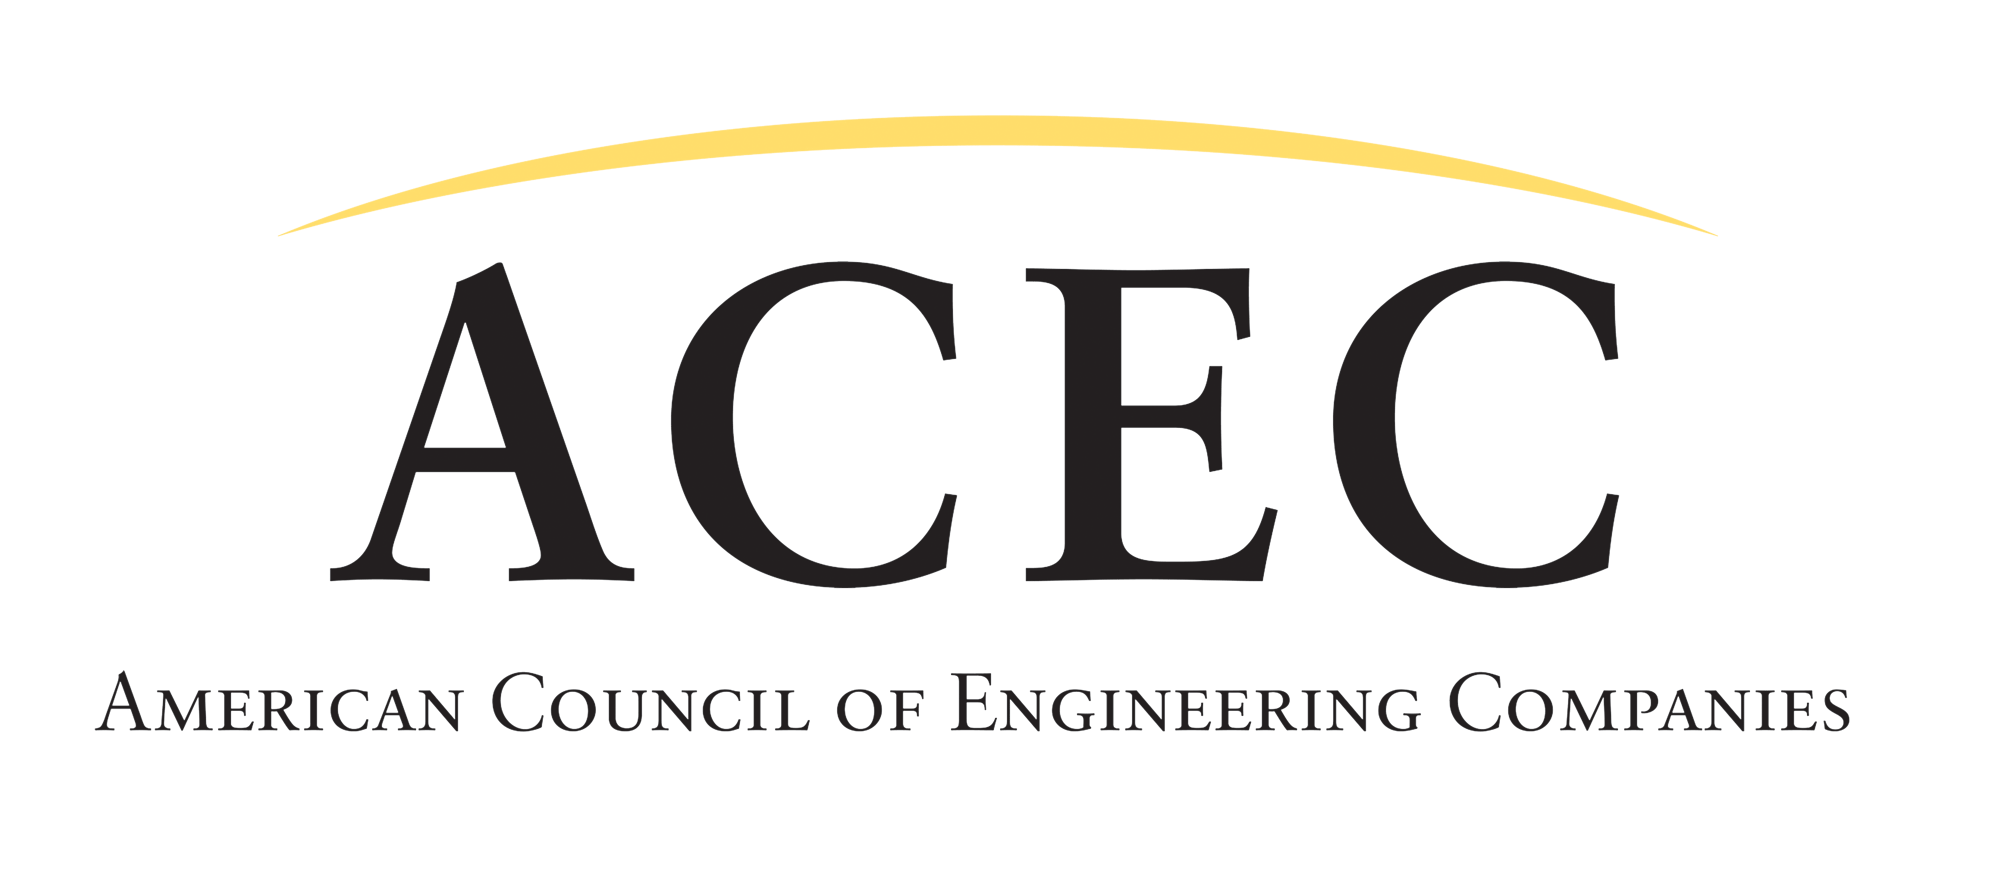 transparent background acec logo